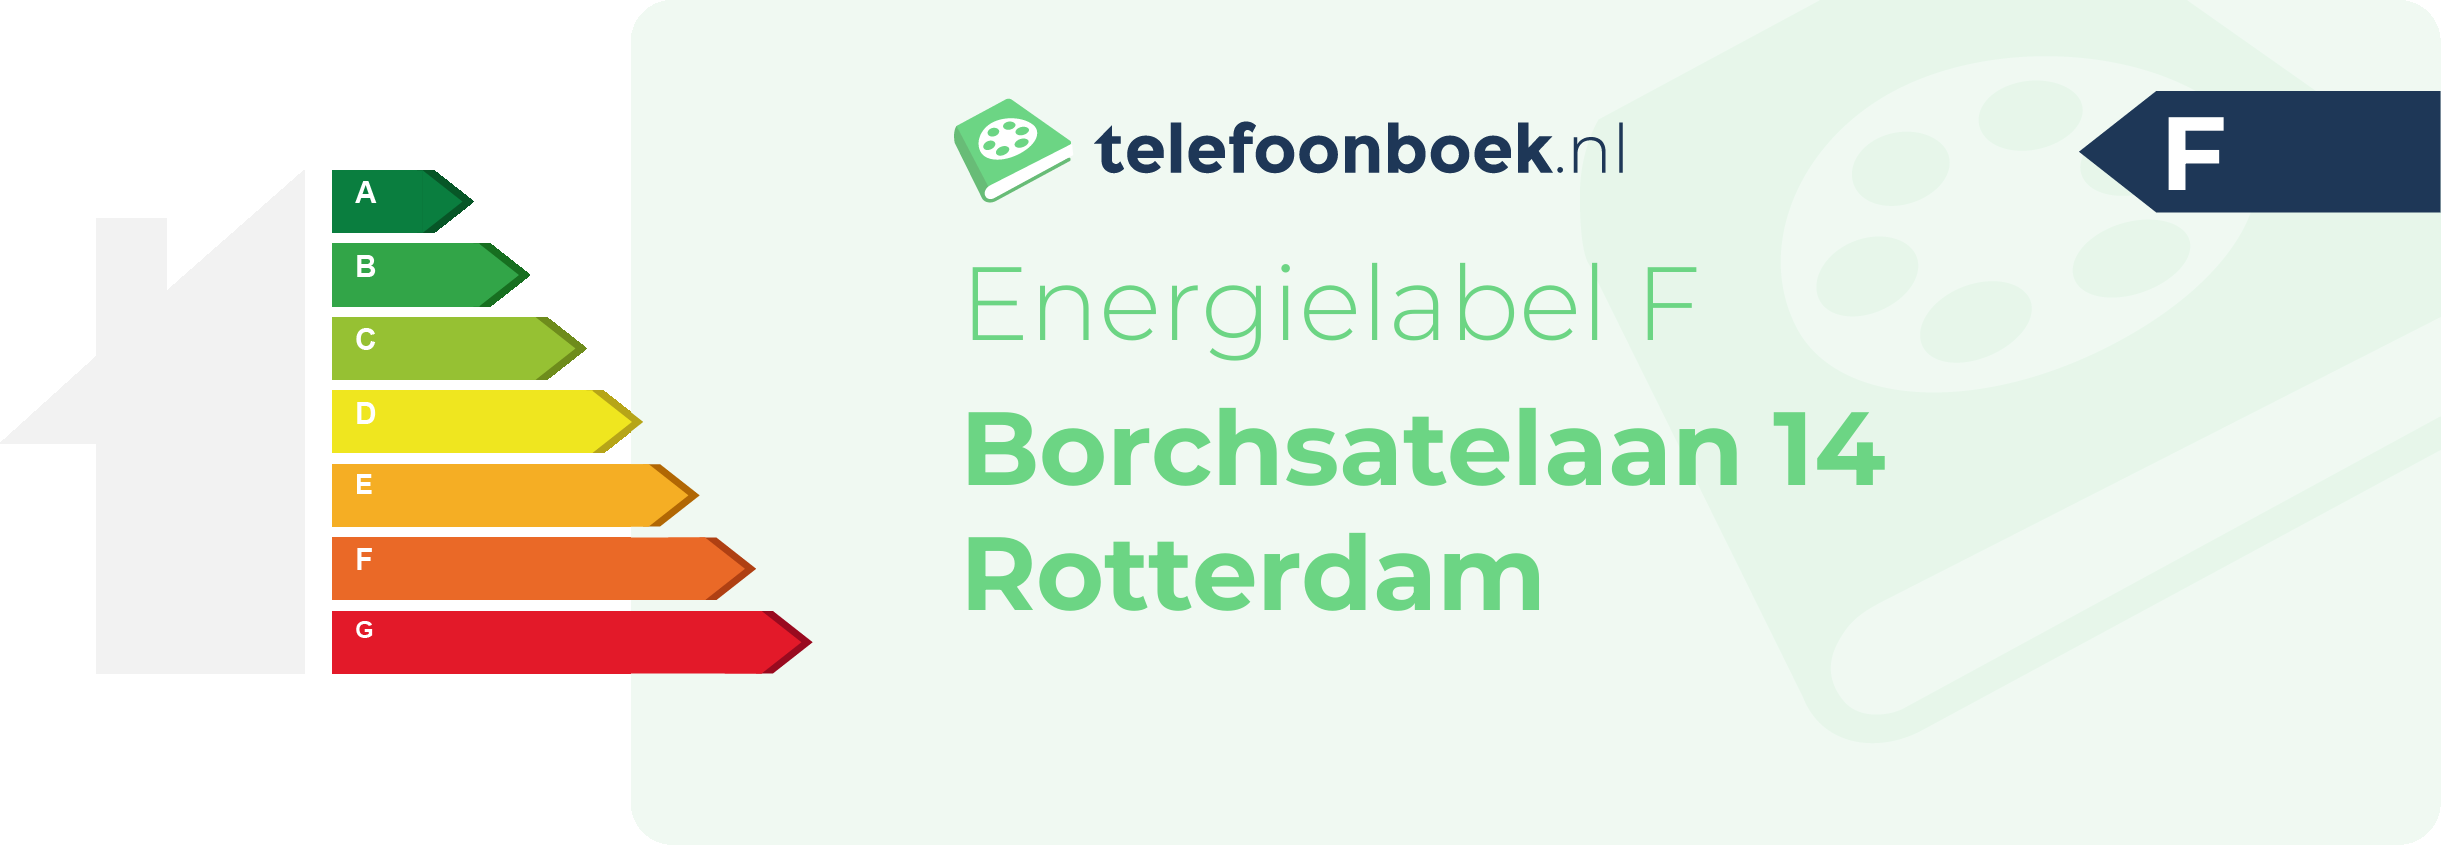 Energielabel Borchsatelaan 14 Rotterdam